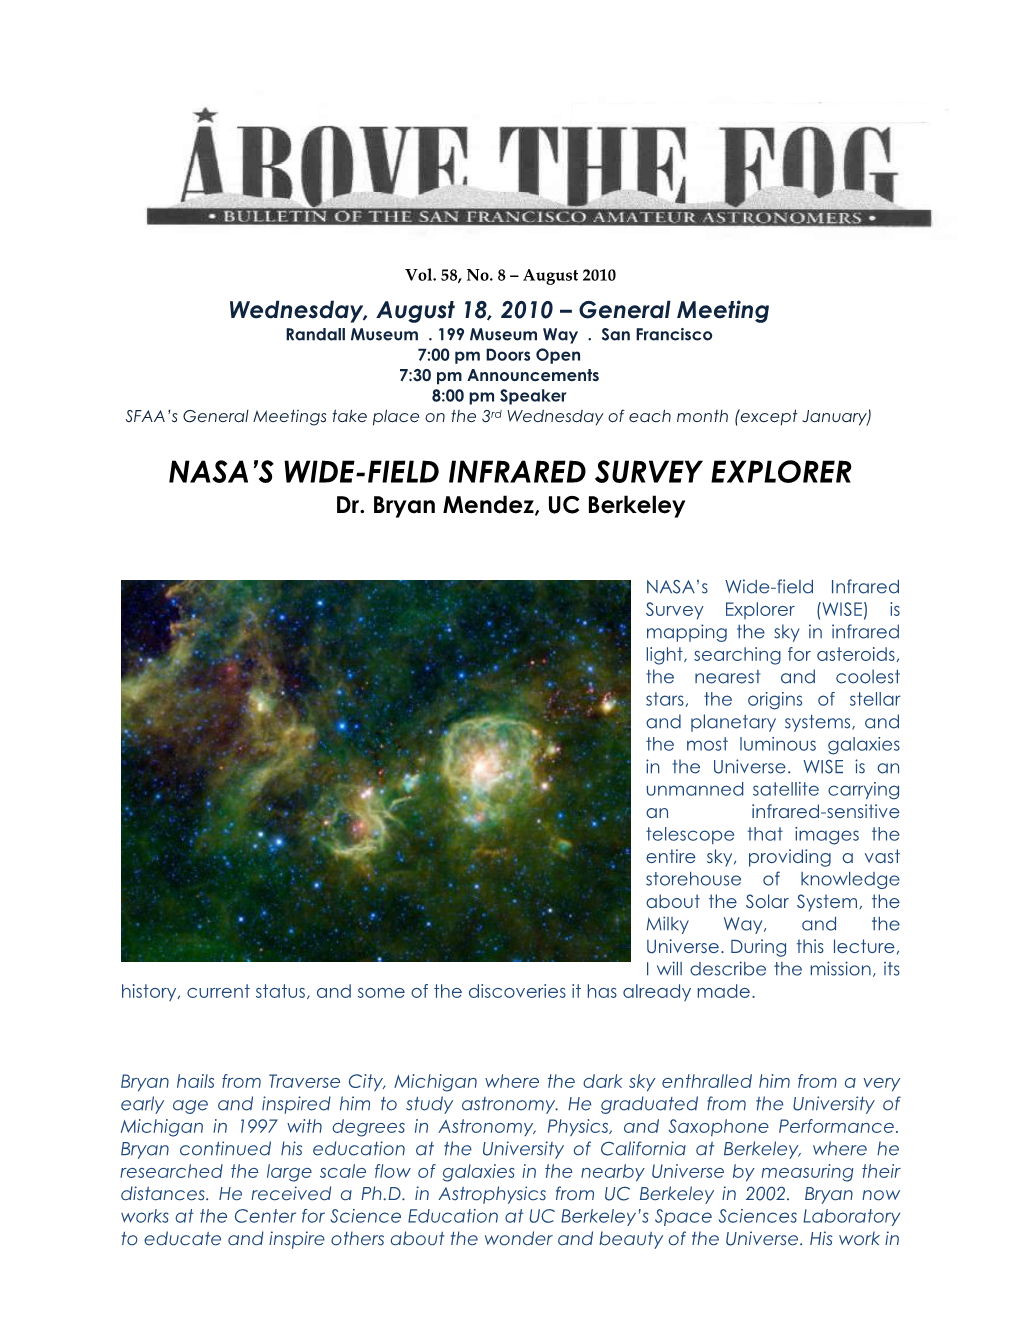 Nasa's Wide-Field Infrared Survey Explorer